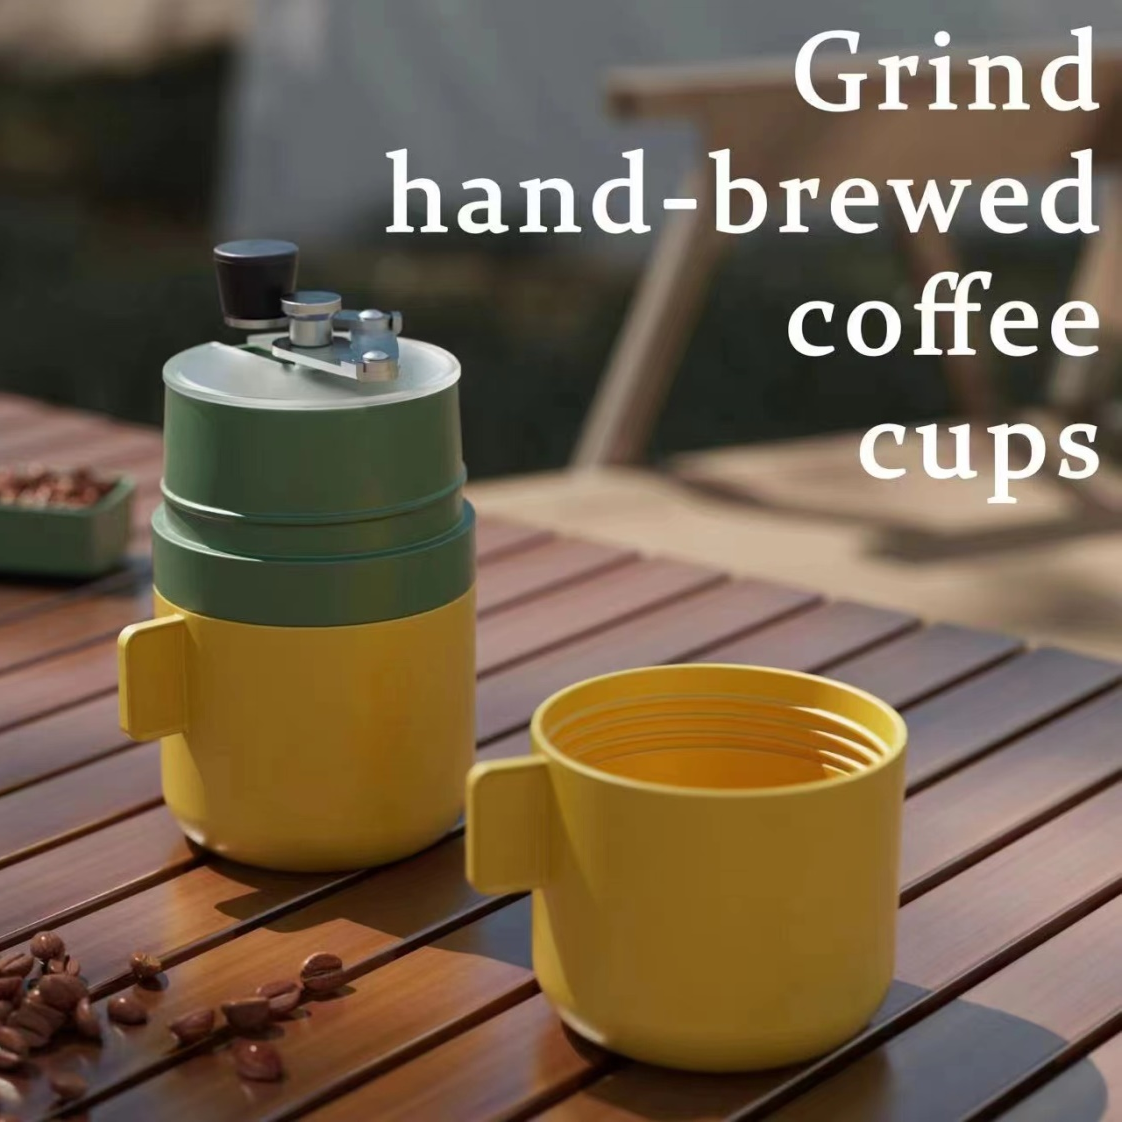 Portable coffee maker-Coffee grinder-Coffee mug-Portable espresso machines